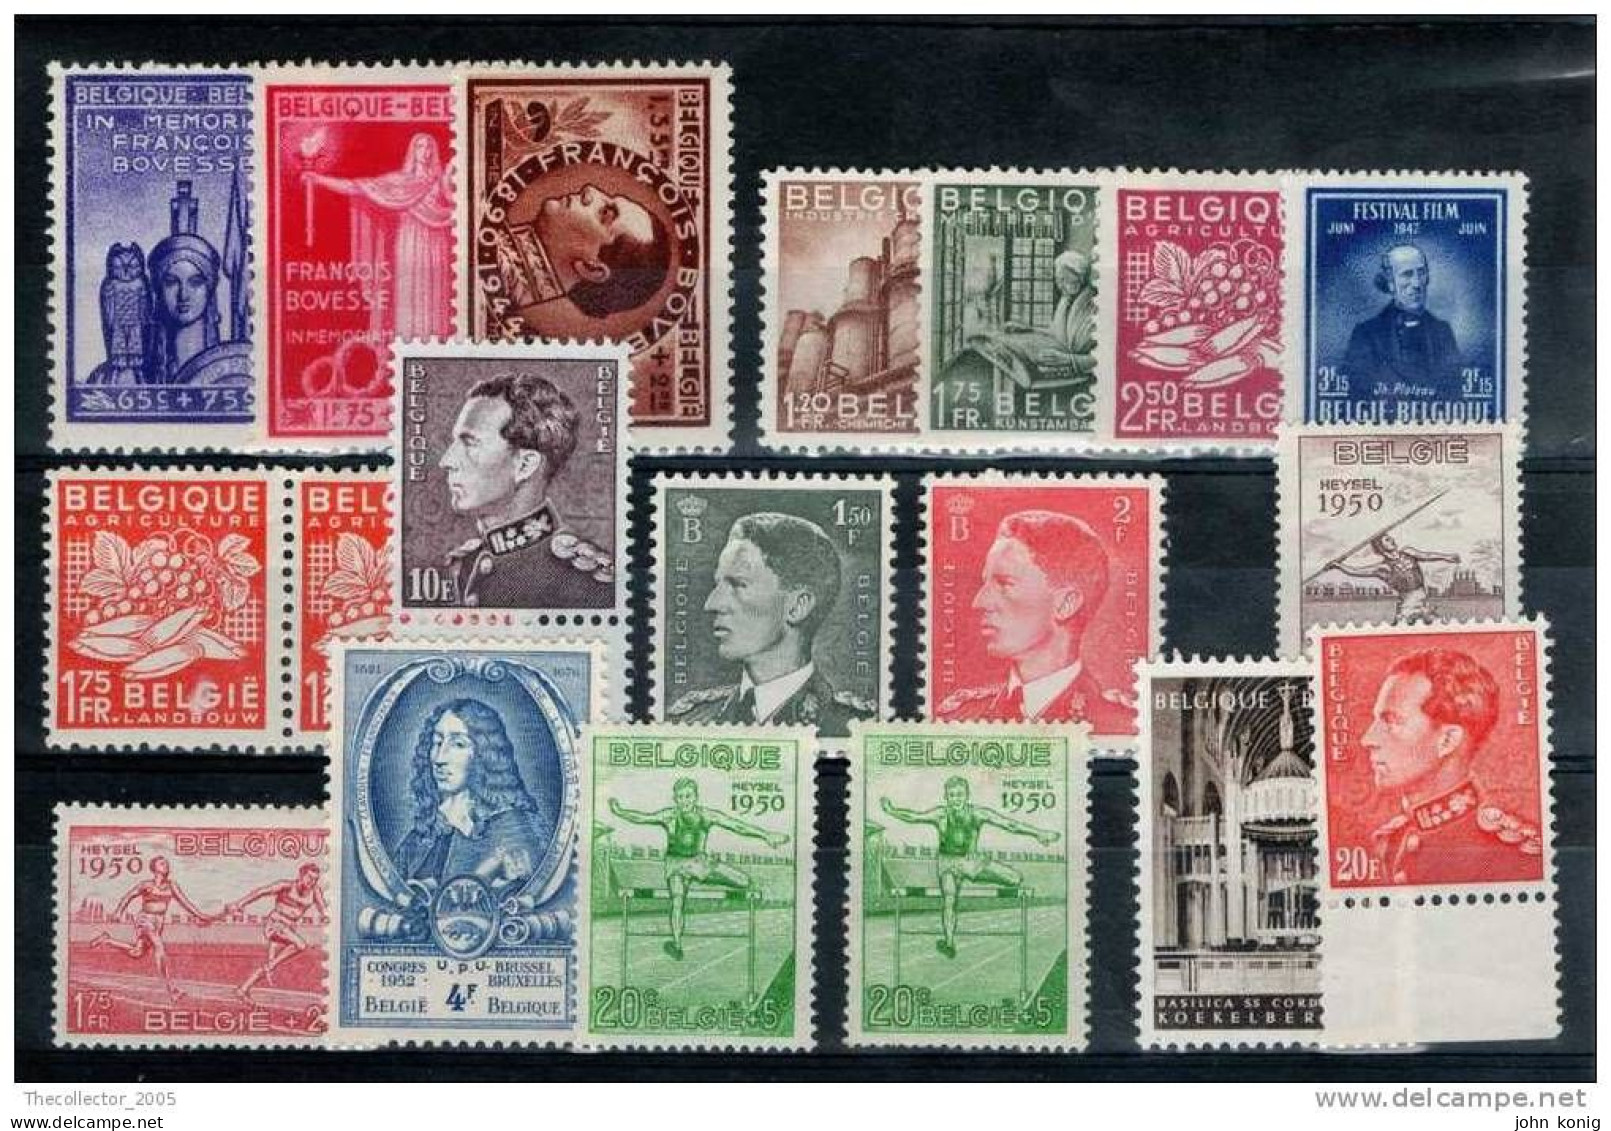 BELGIO - BELGIE - BELGIQUE - Stamps Lot - Nuovi - Never Used - New - Mint - Colecciones